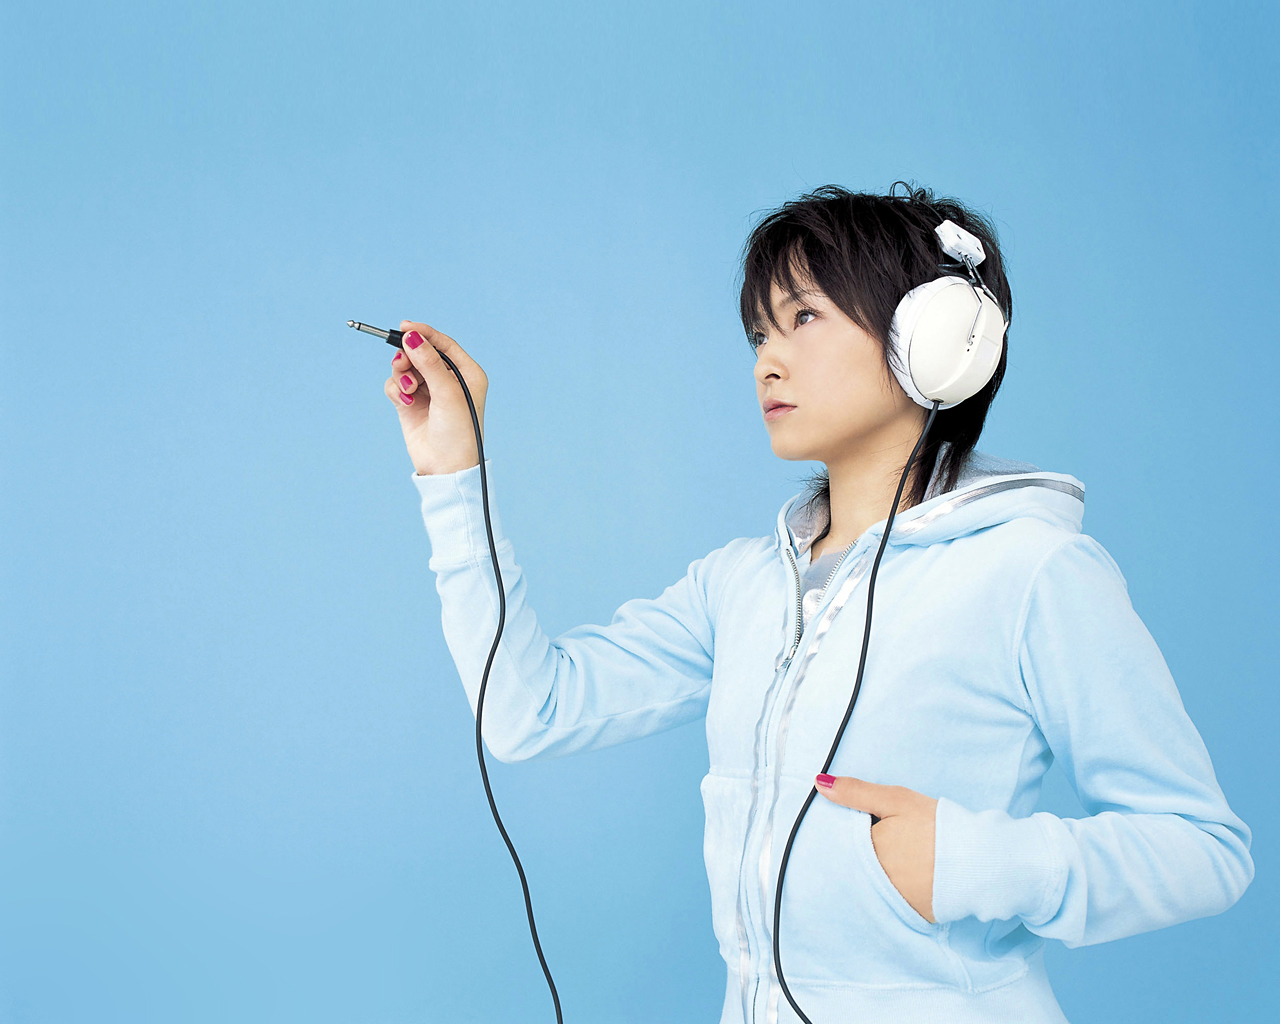 Handy-Wallpaper Musik, Kopfhörer, Asiatisch kostenlos herunterladen.